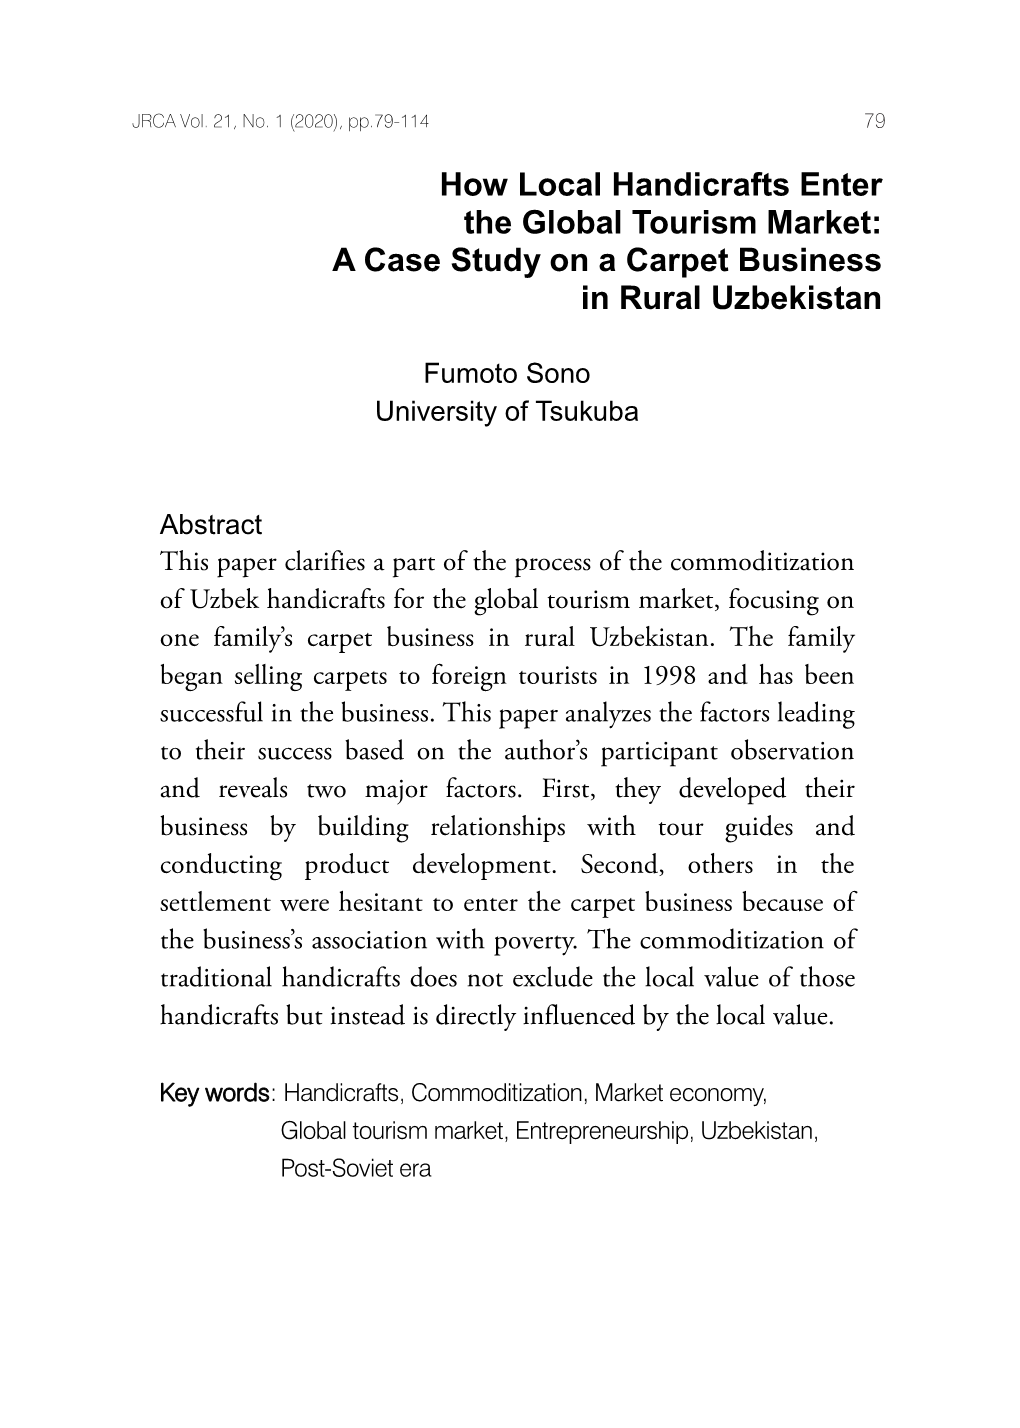 How Local Handicrafts Enter the Global Tourism Market: a Case Study on a Carpet Business in Rural Uzbekistan